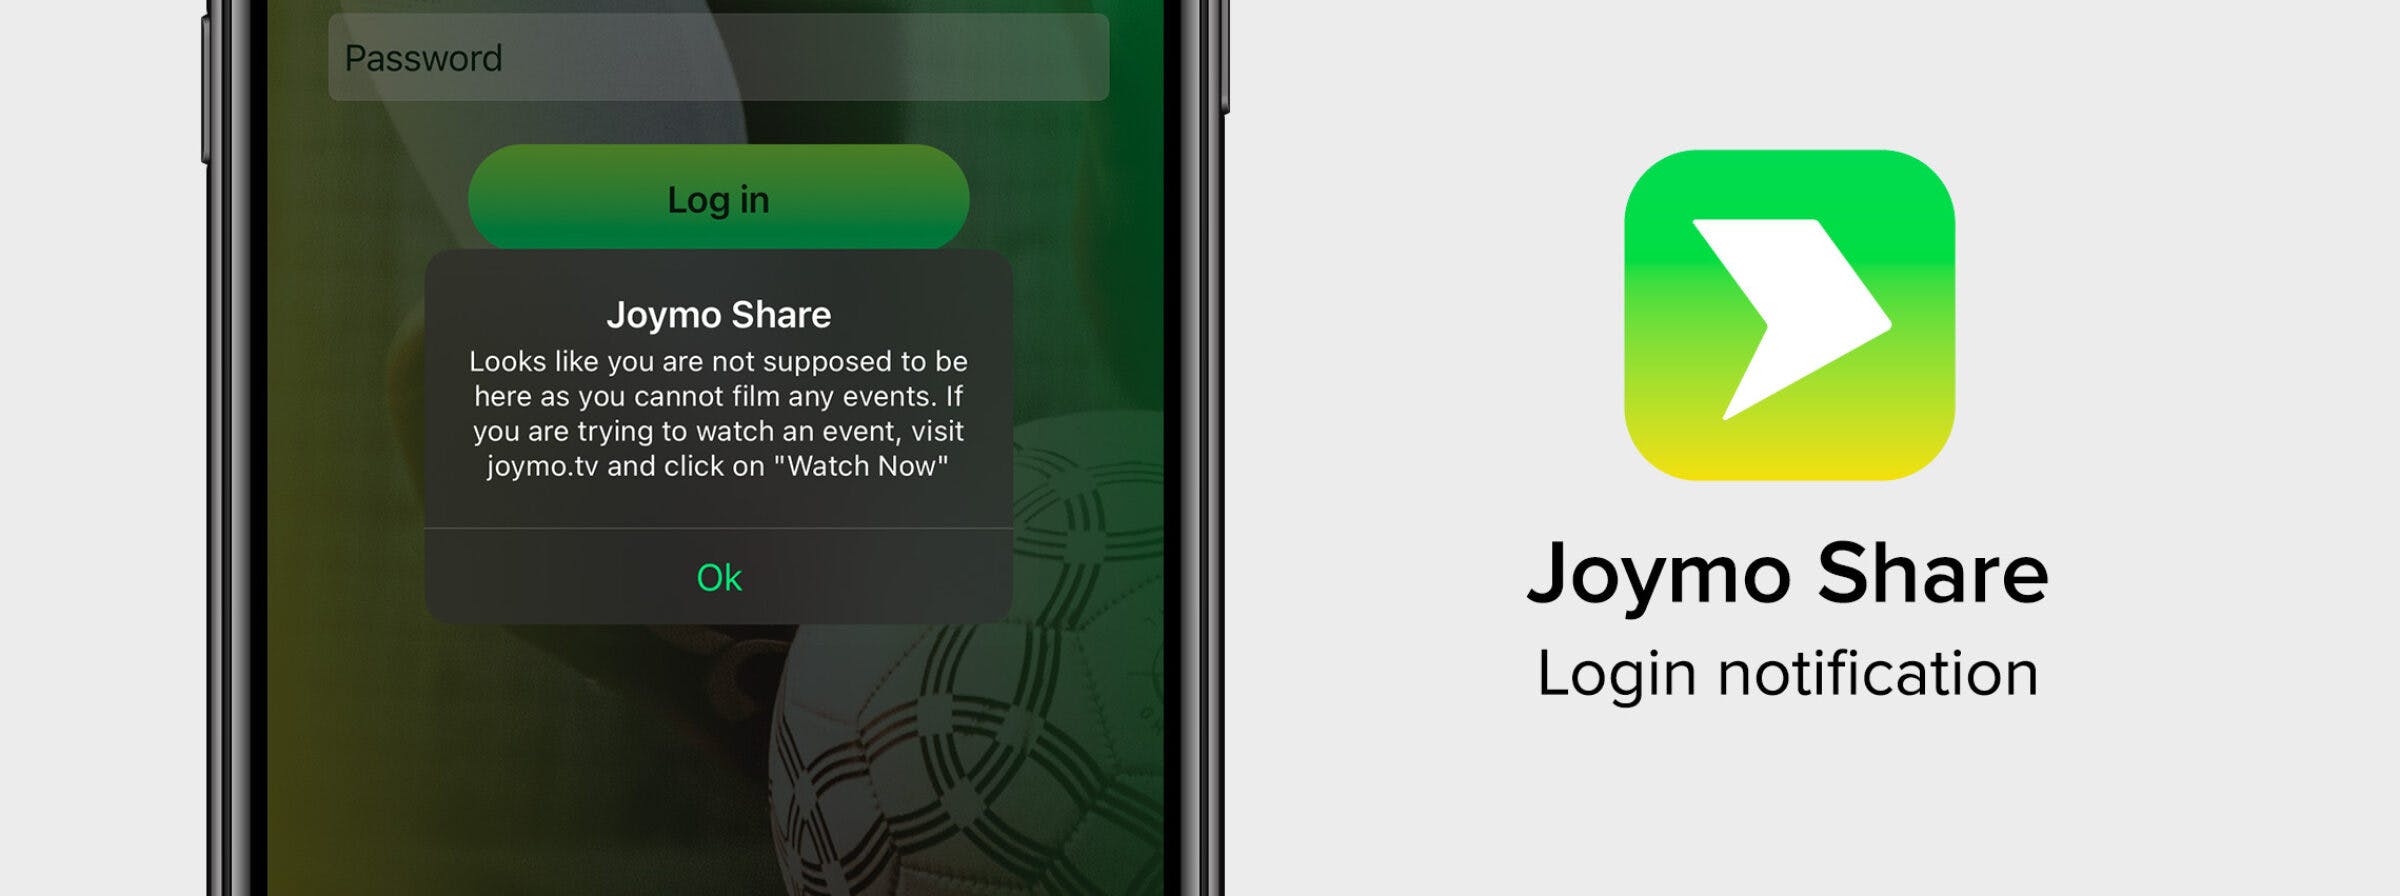 Joymo share login notification 2